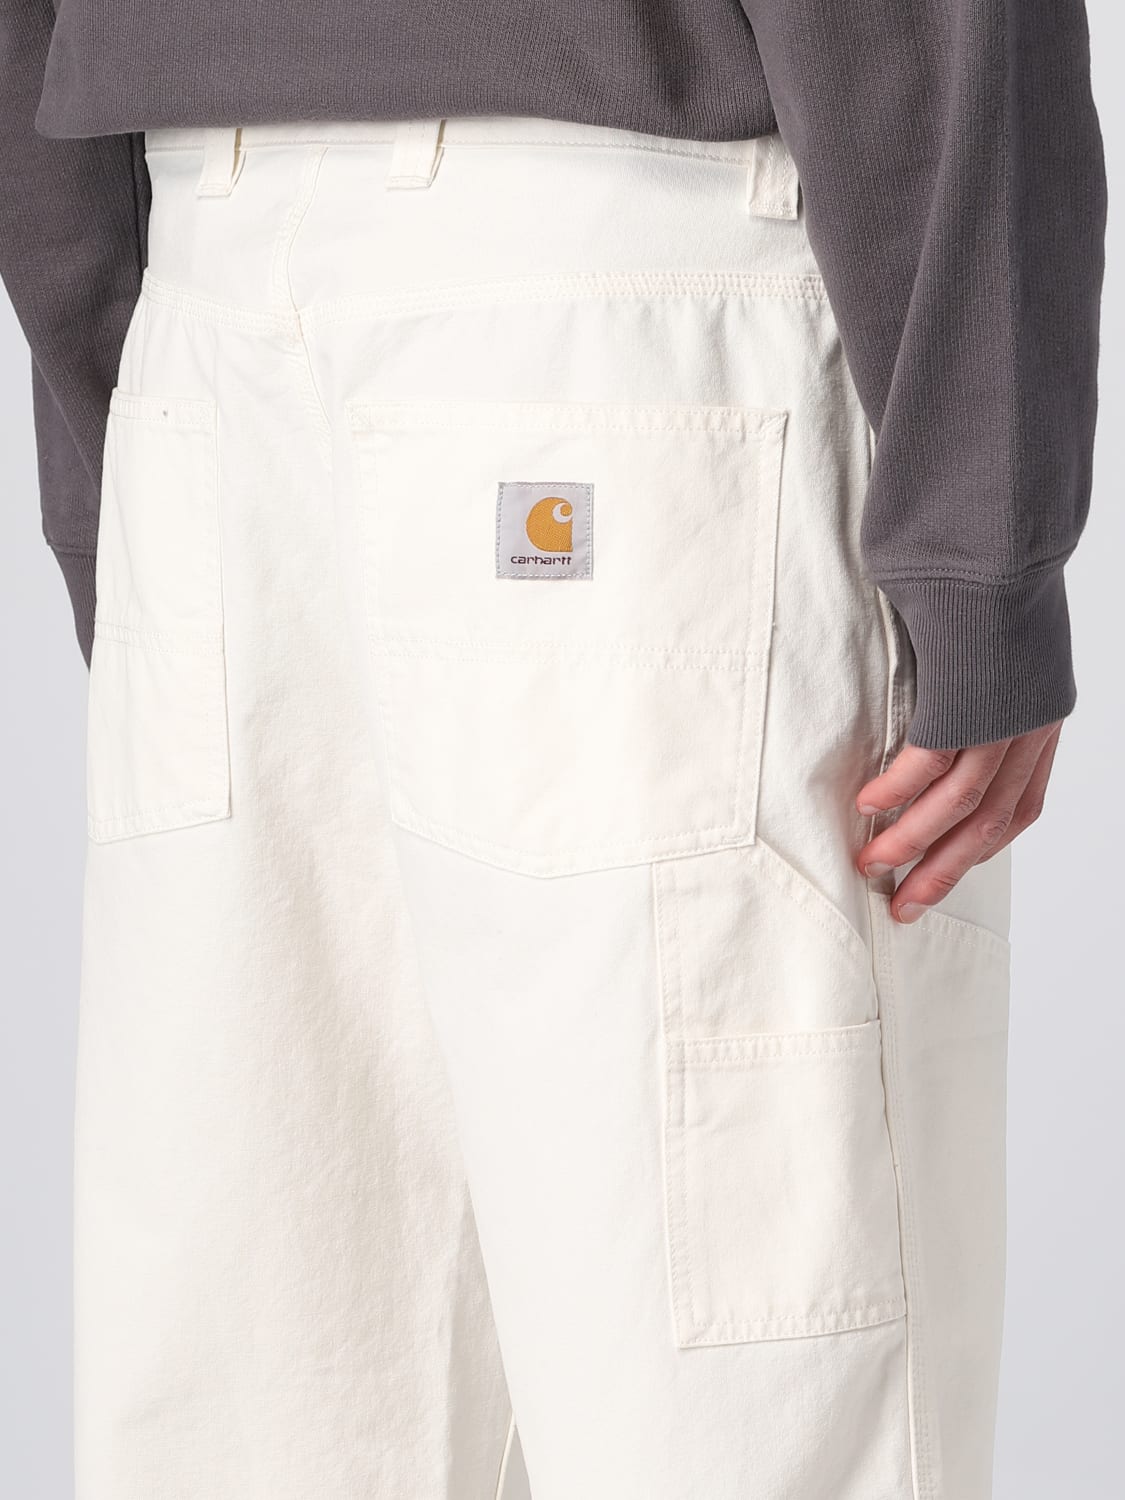 Carhartt WIP Pants - White - S